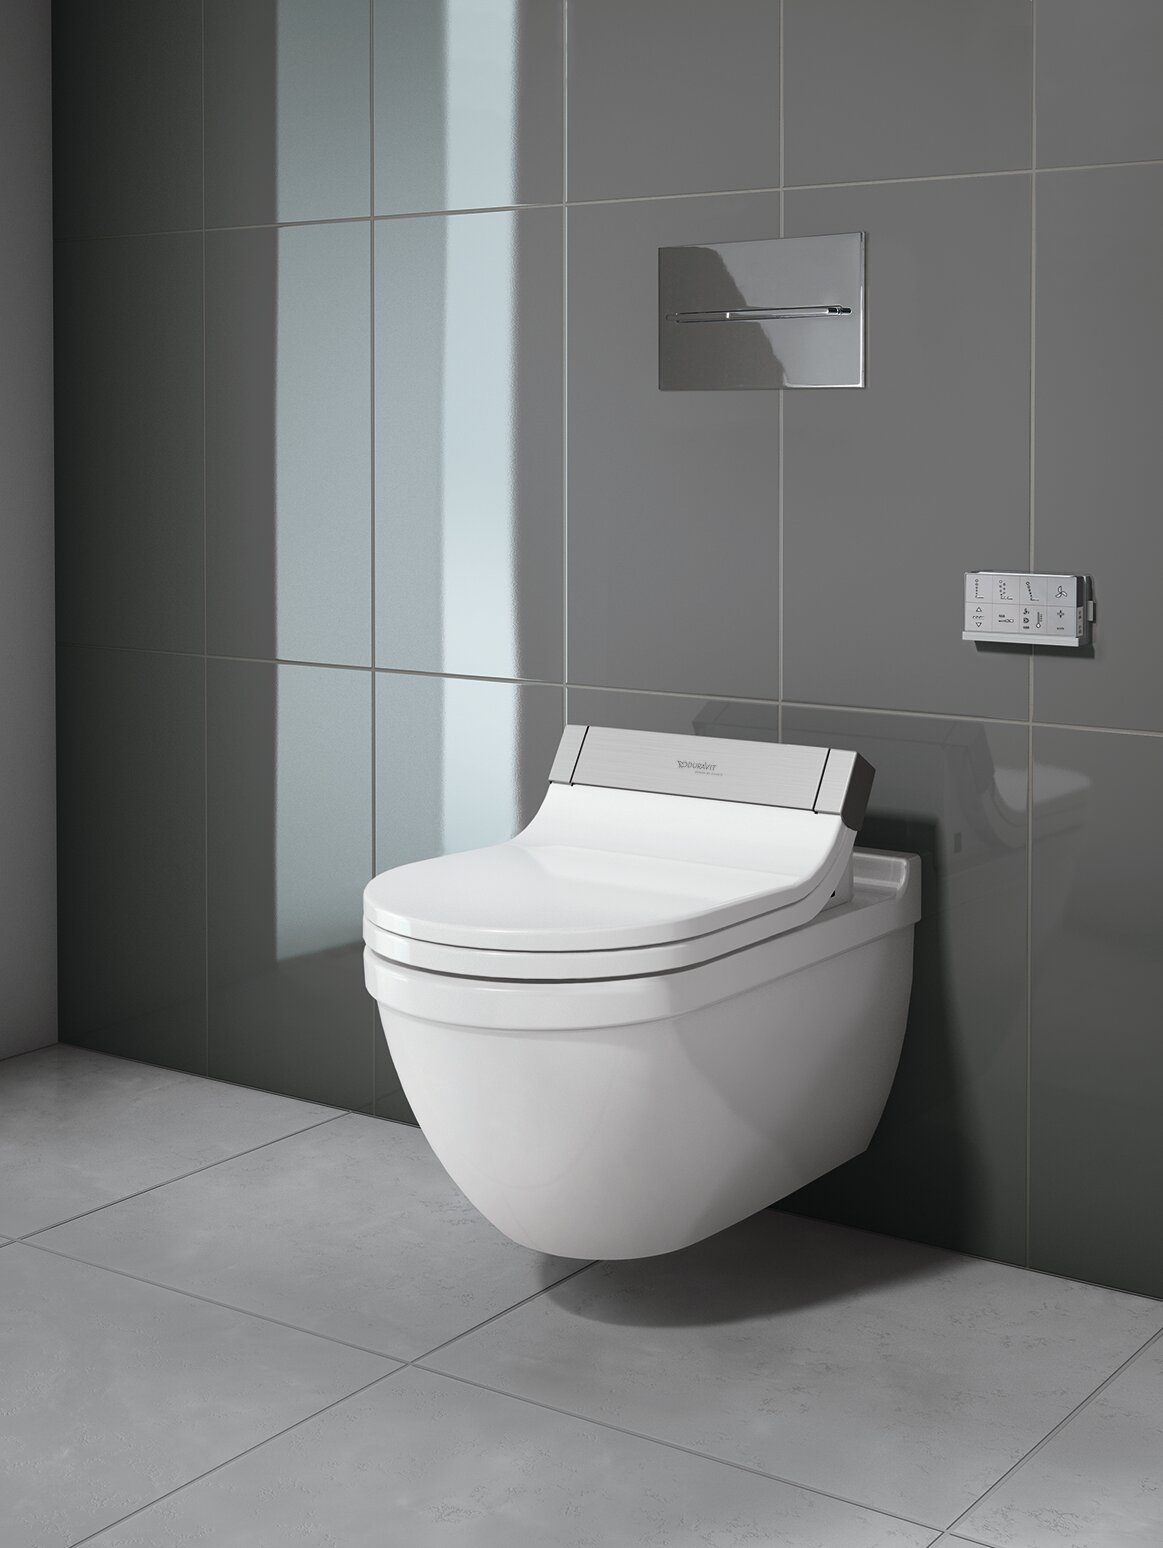 Serena Aardappelen tarwe Duravit Starck 3 Wall Mounted Toilet Bowl for Sensowash Dual Flush | Wayfair